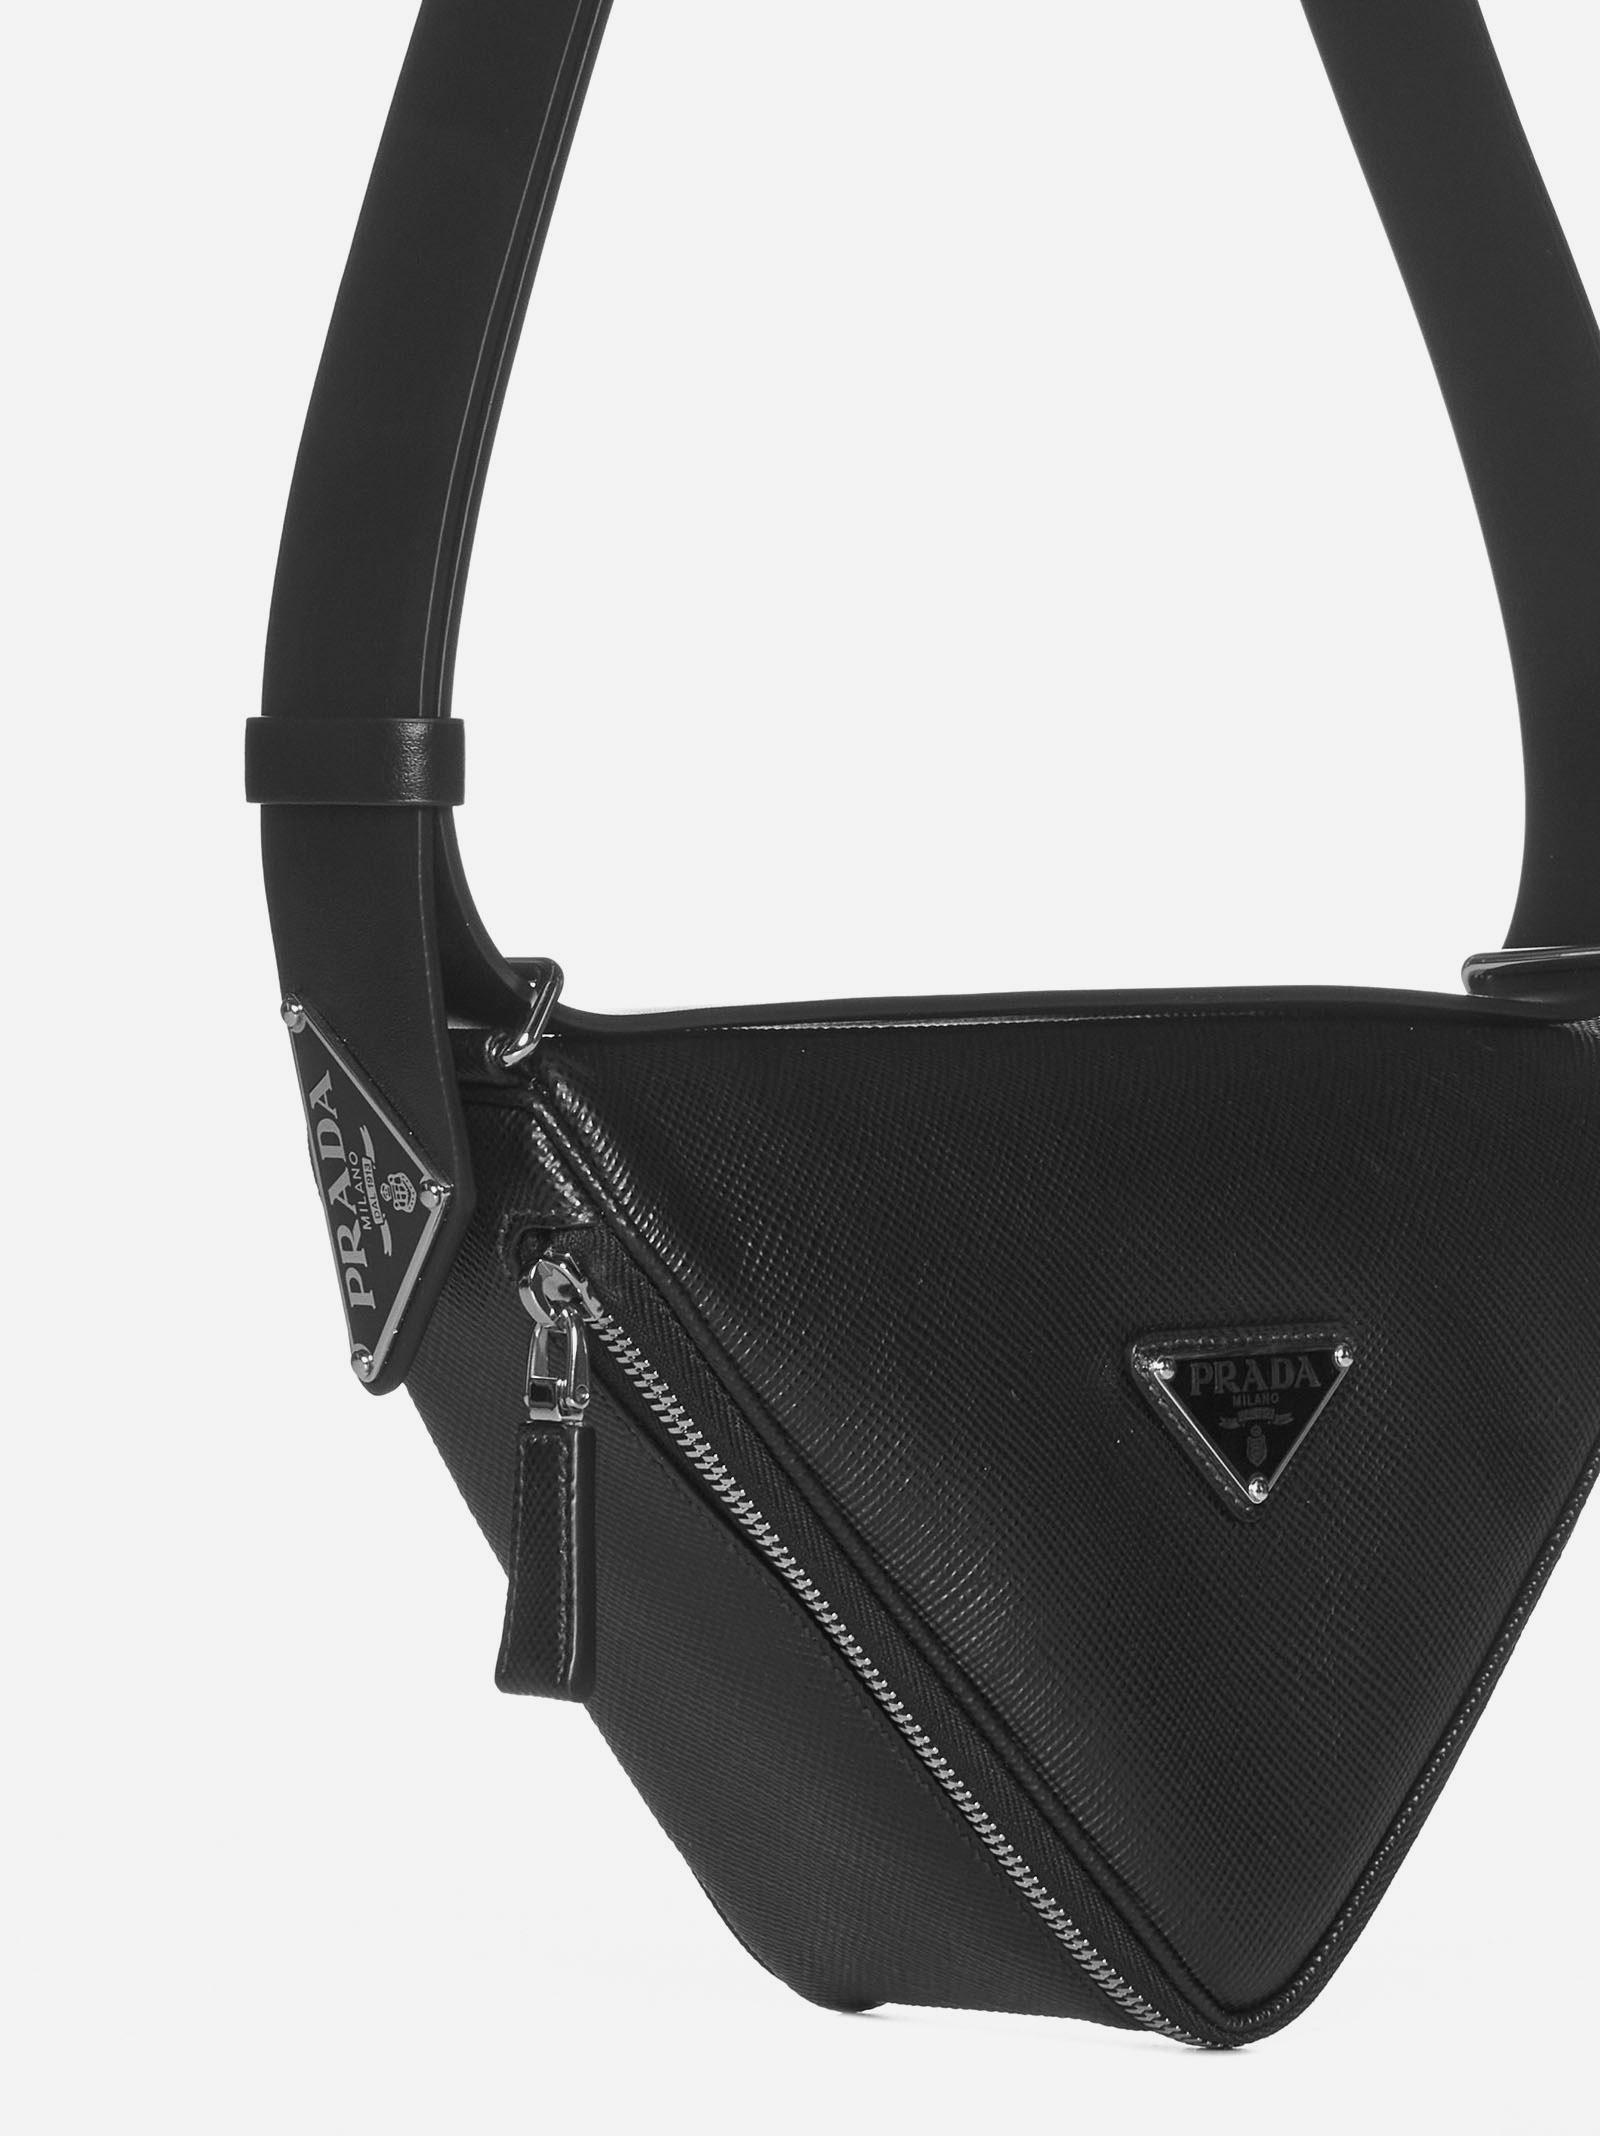 Excellent Condition] PRADA Triangle Logo Nylon Shoulder Bag Pochette Black